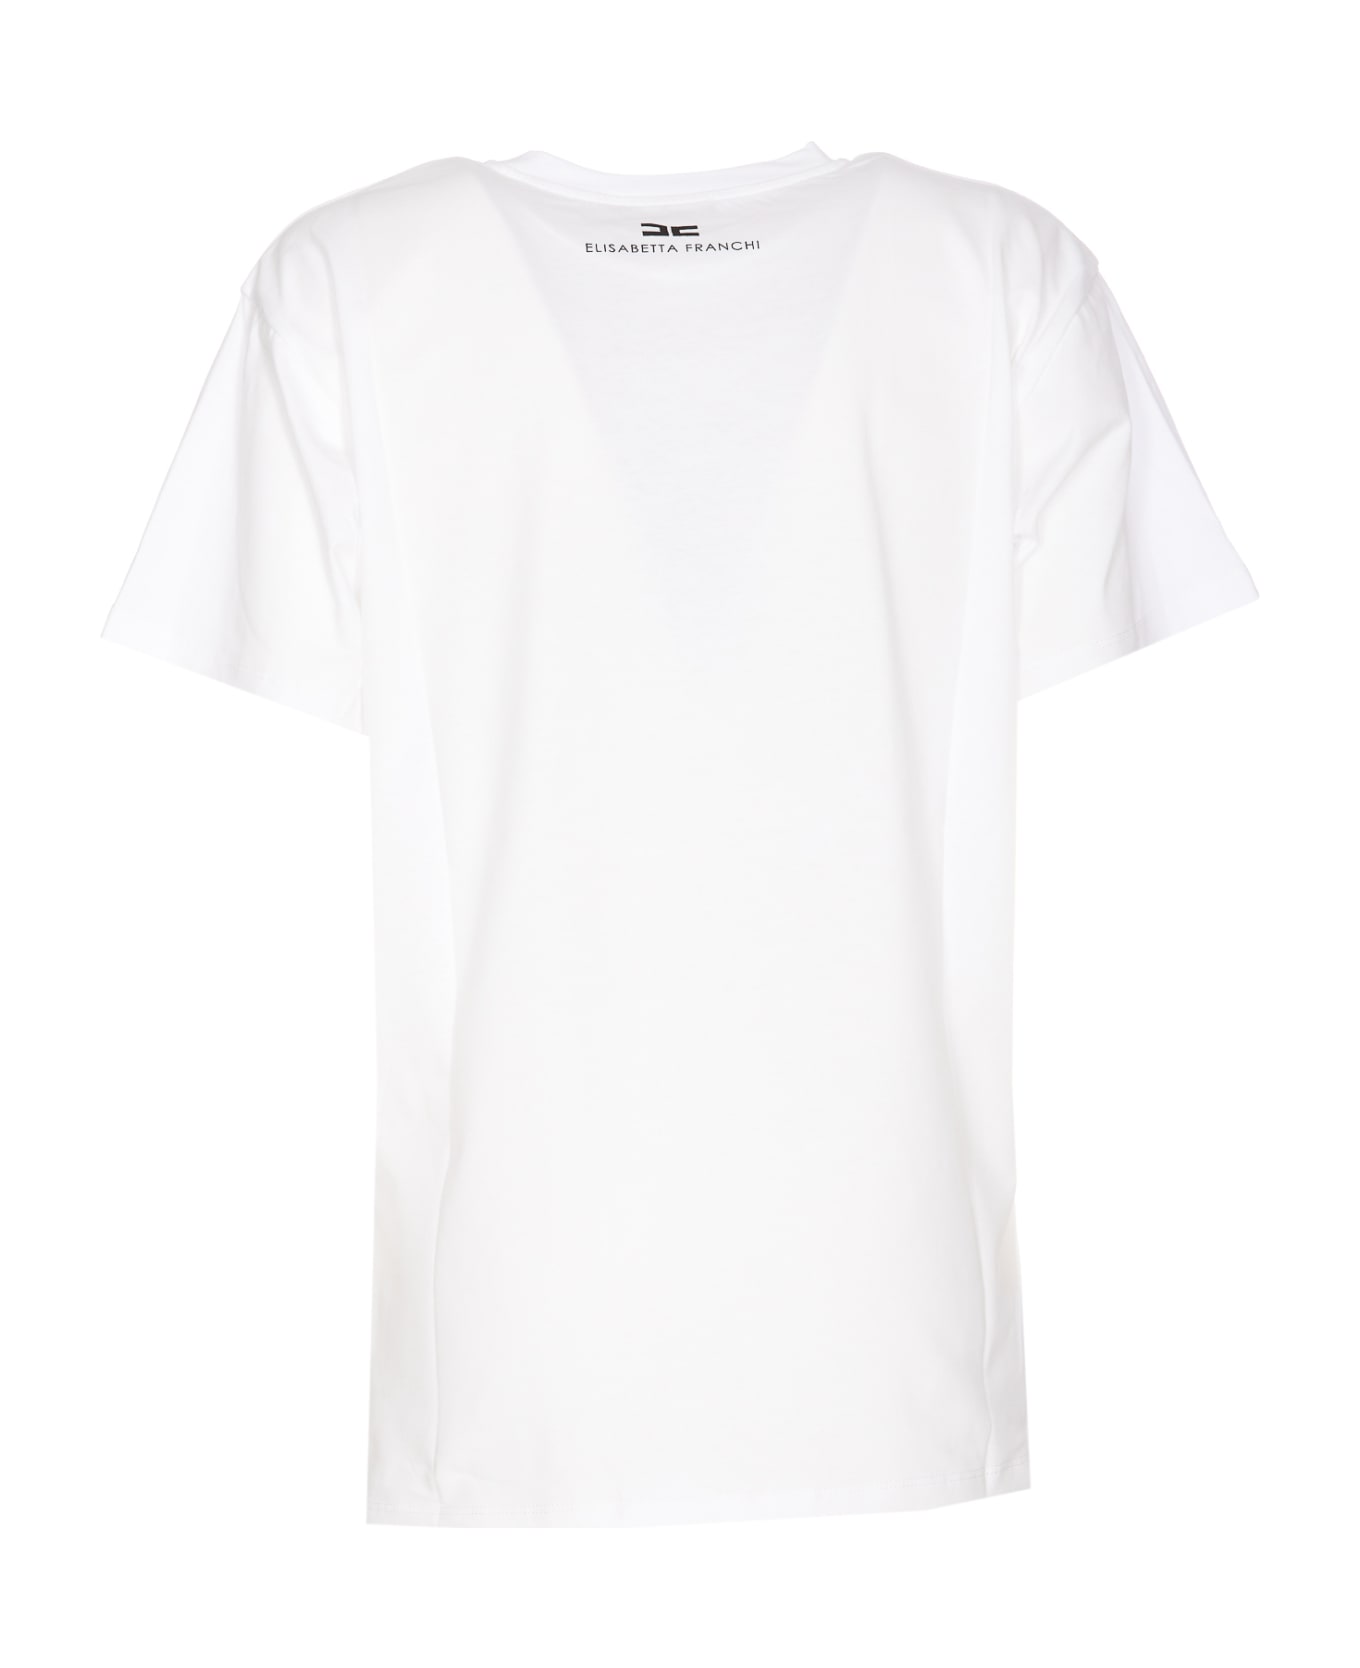 Elisabetta Franchi Printed T-shirt - White